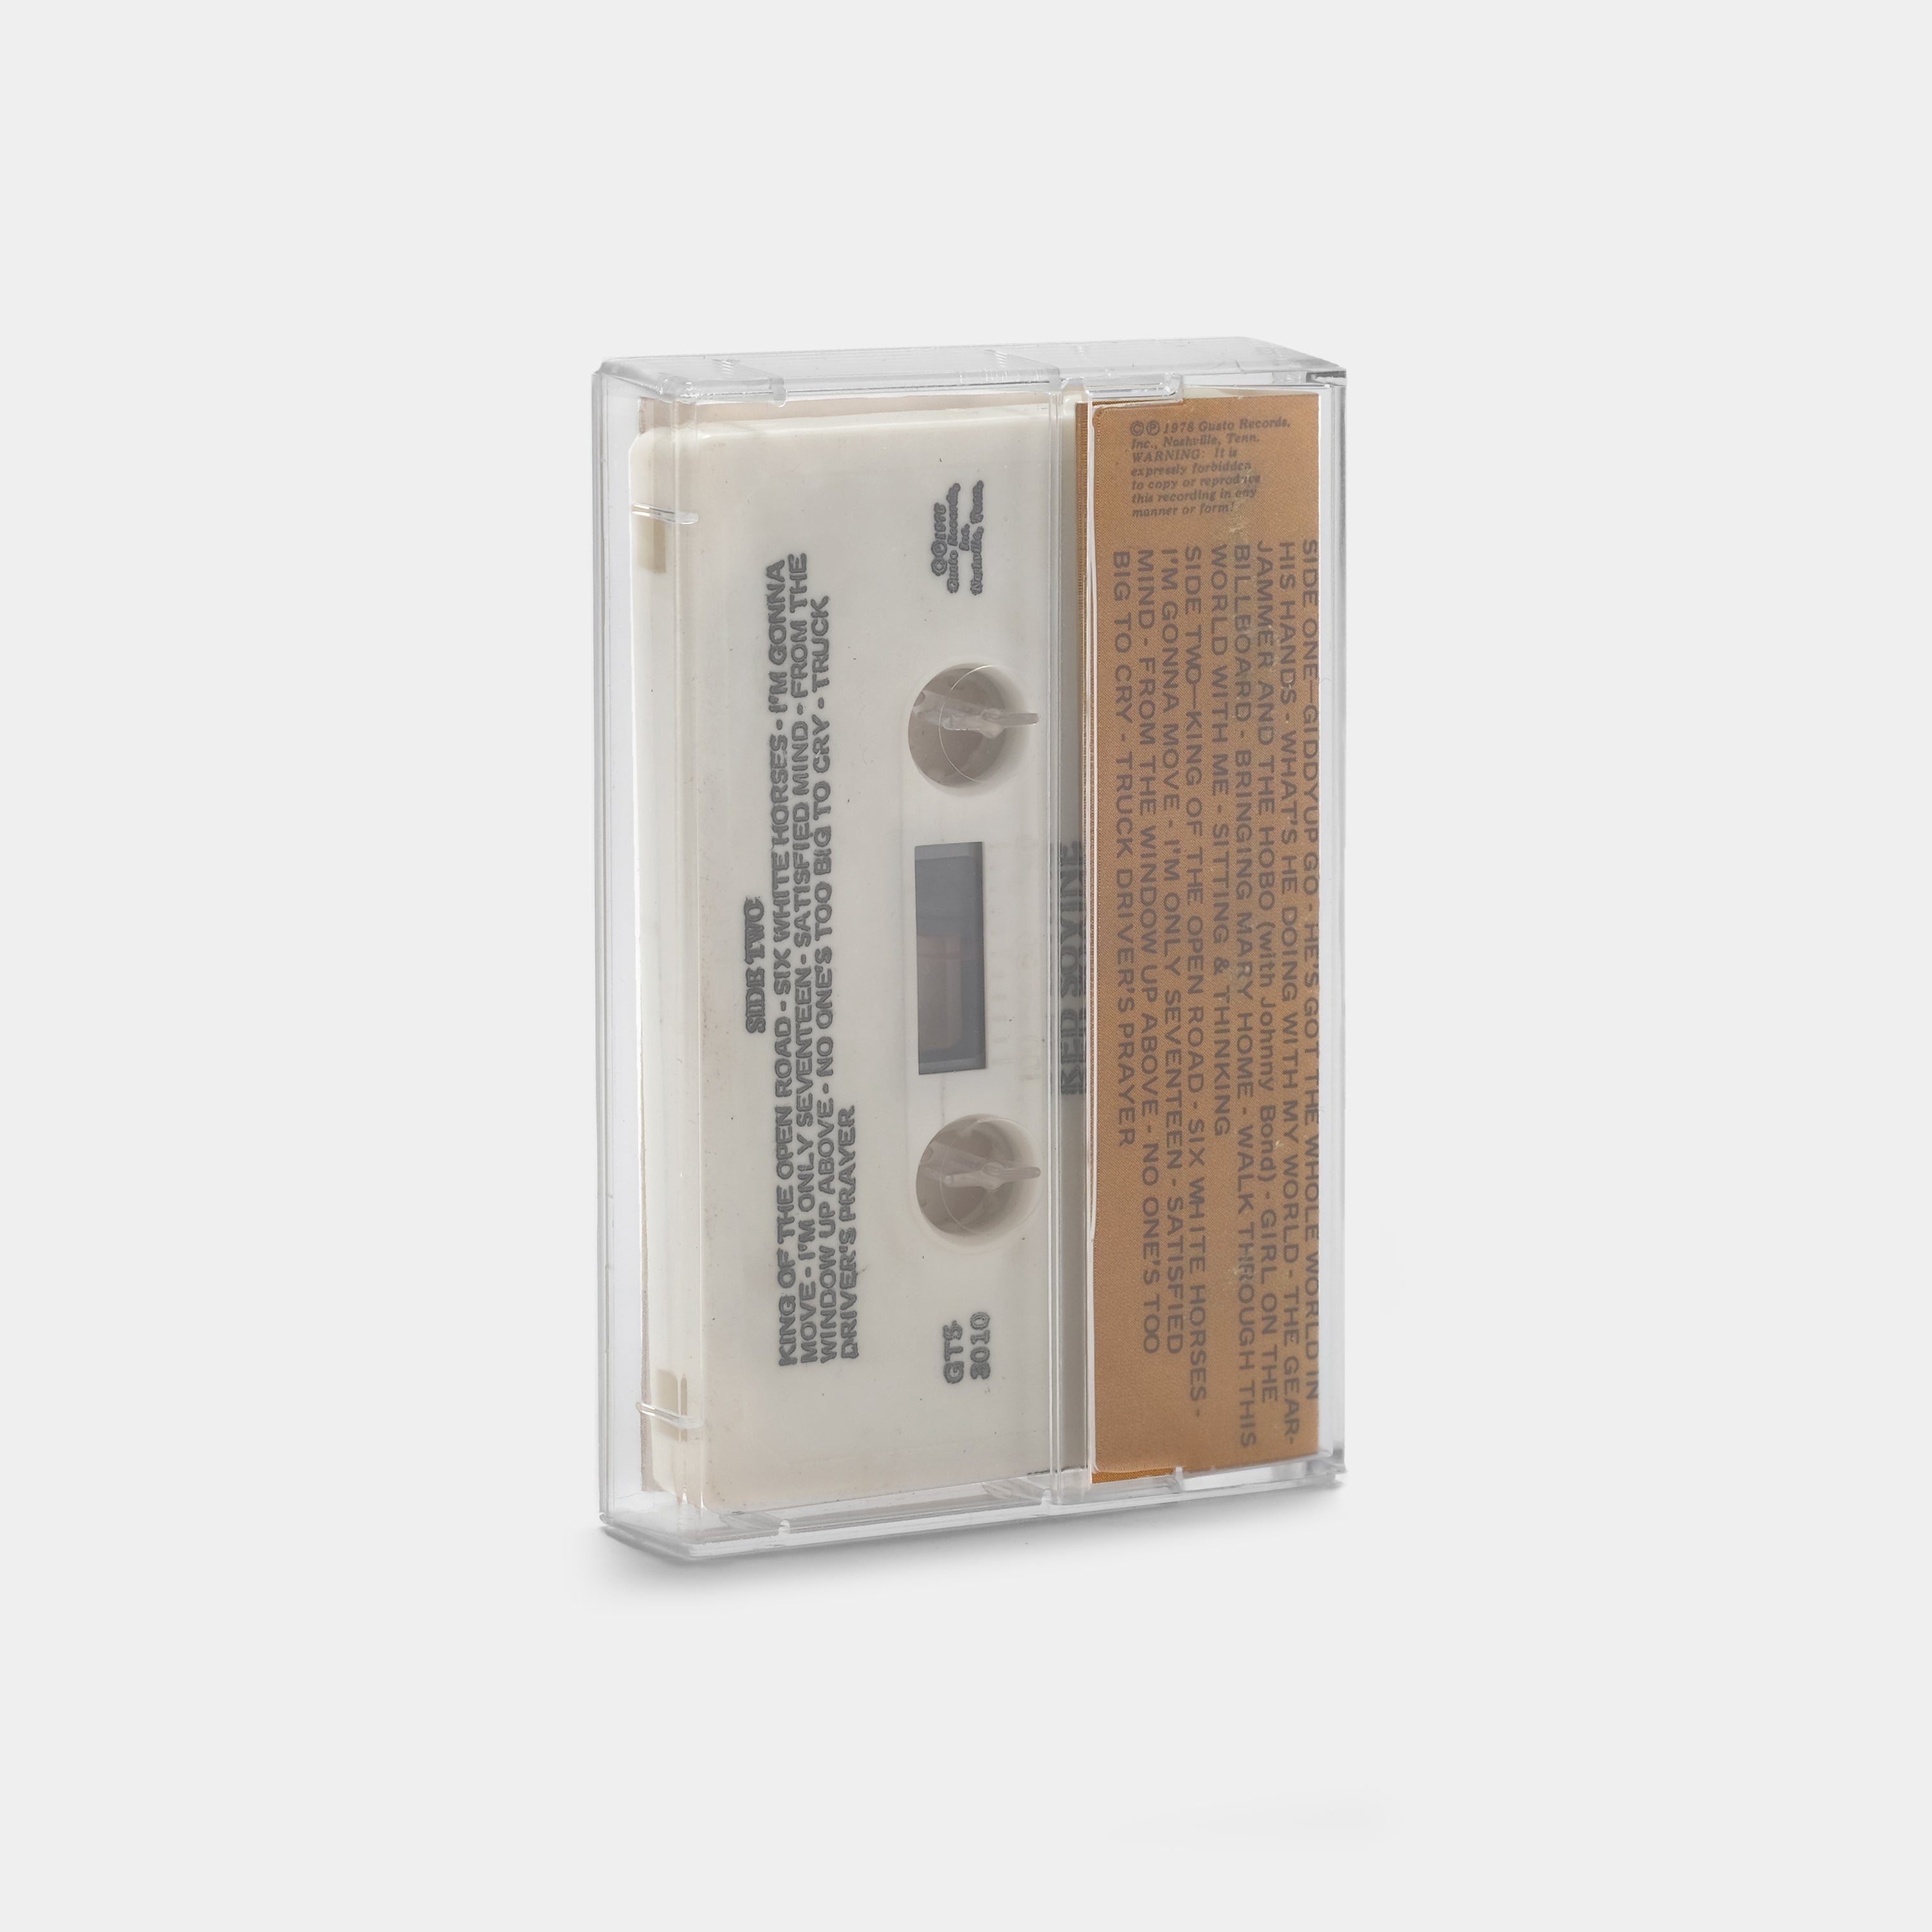 Red Sovine - 16 All Time Favorites Cassette Tape